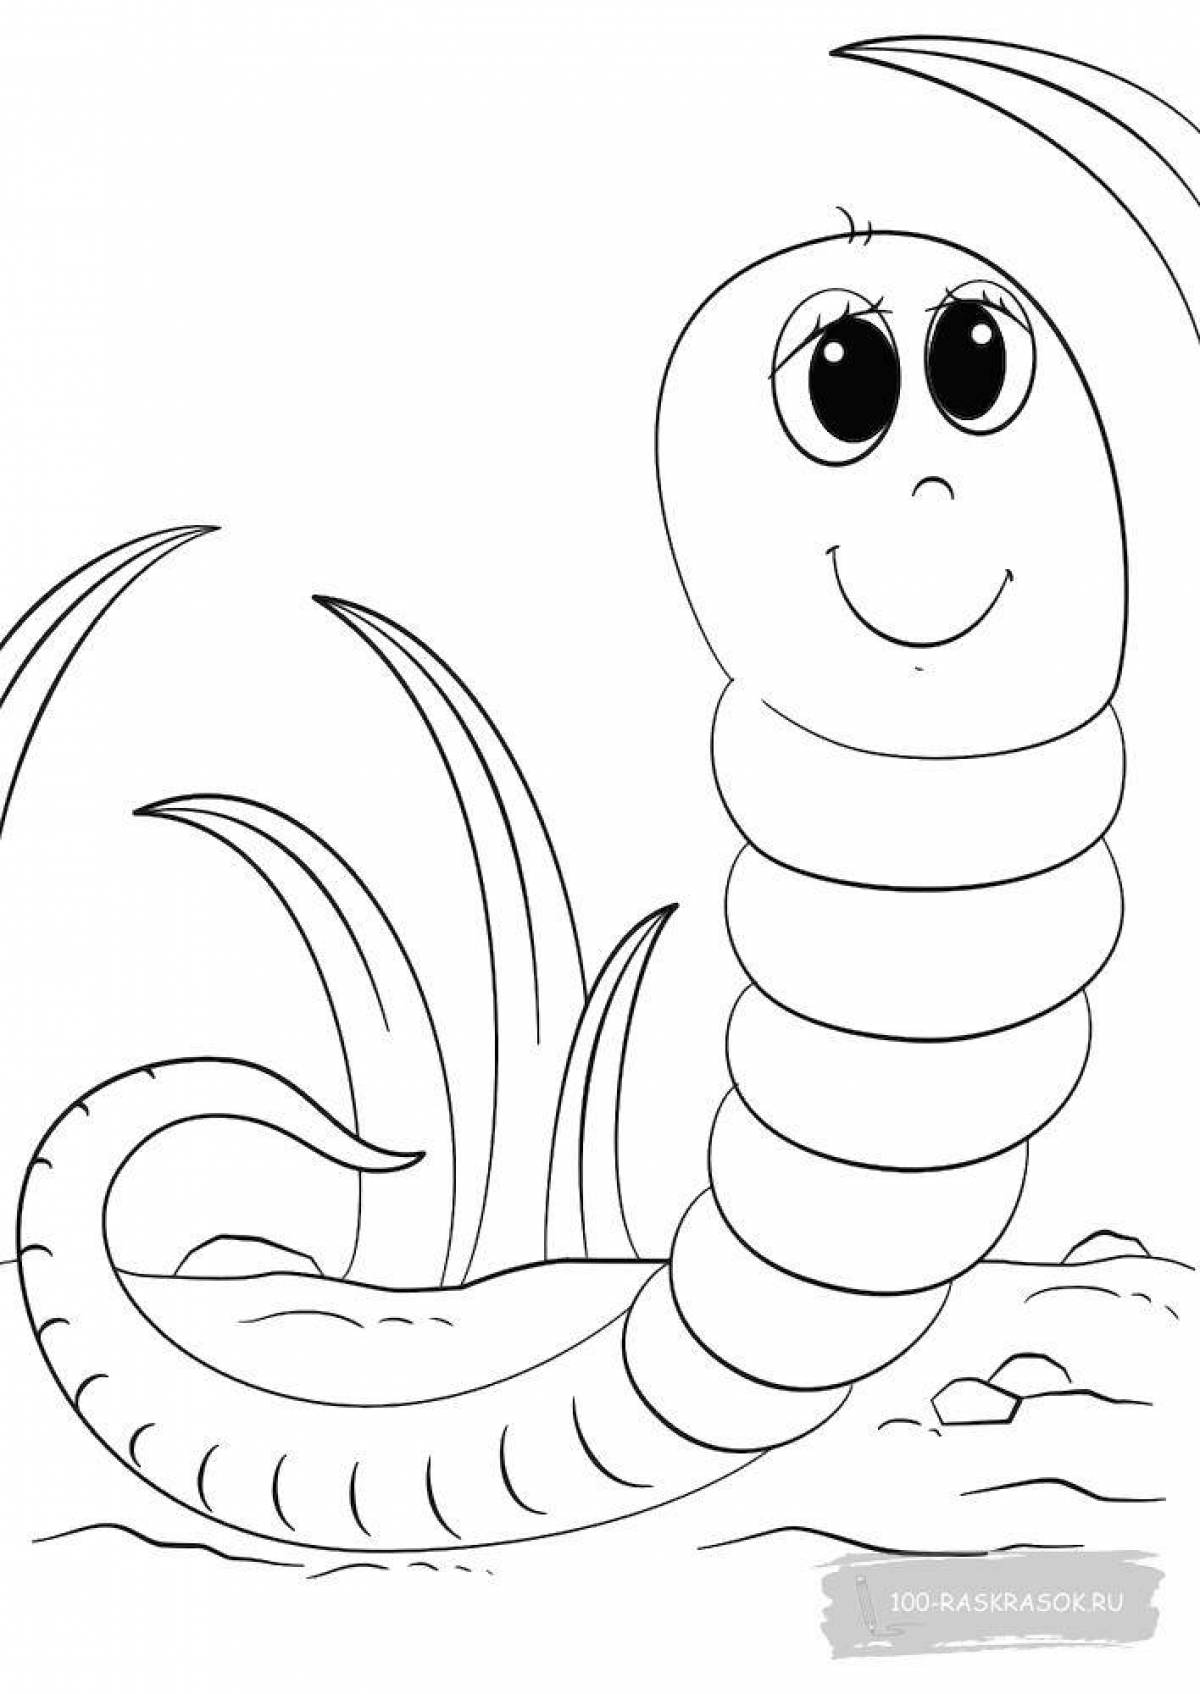 Fun coloring worms